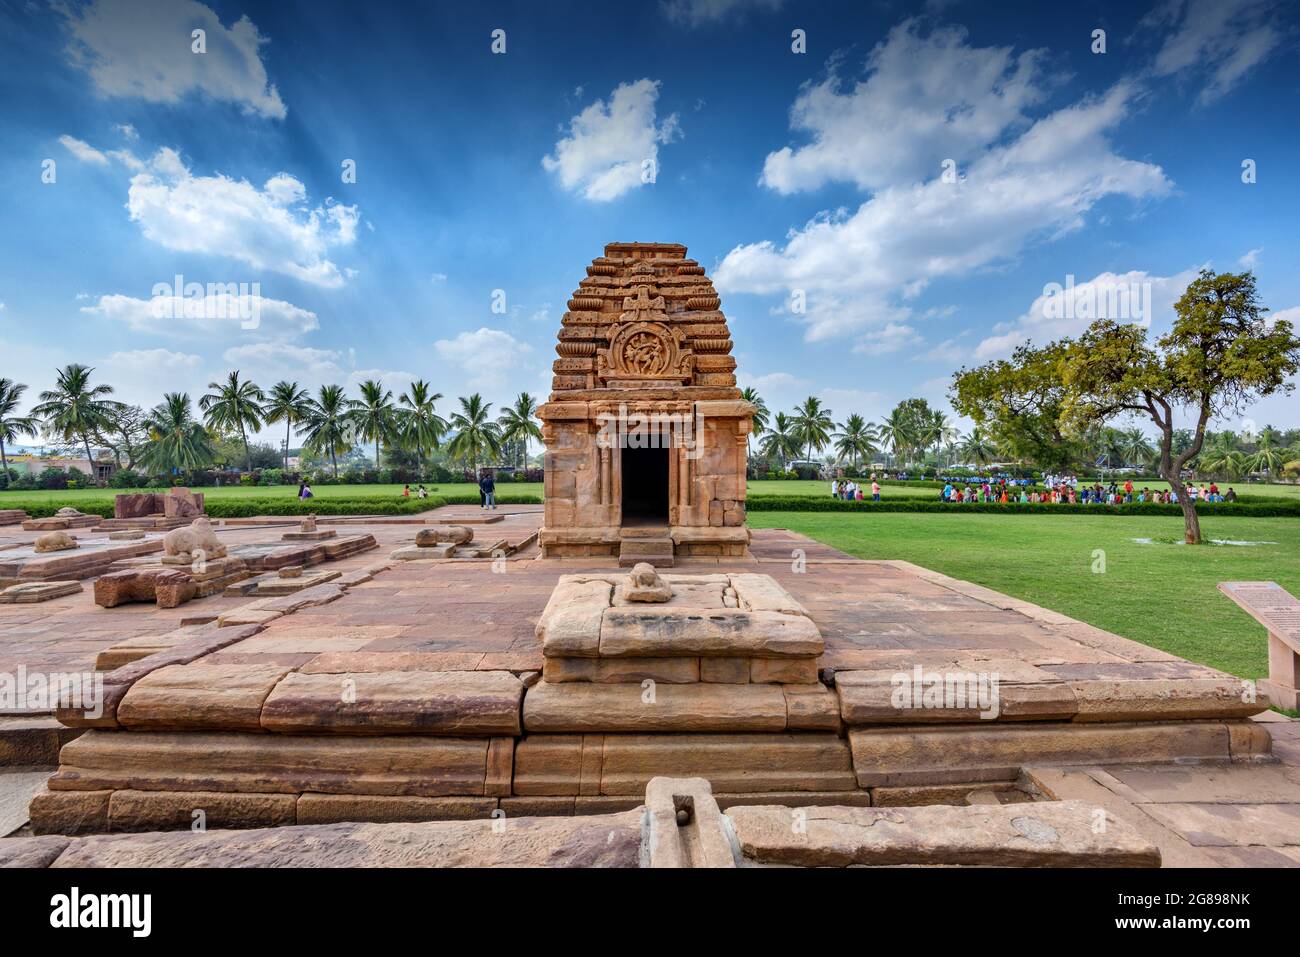 Pattadakal, Karnataka, India - January 11, 2020 : The Jambulingeshswara Temple at Pattadakal temple complex, dating to the 7th-8th century, the early Stock Photo